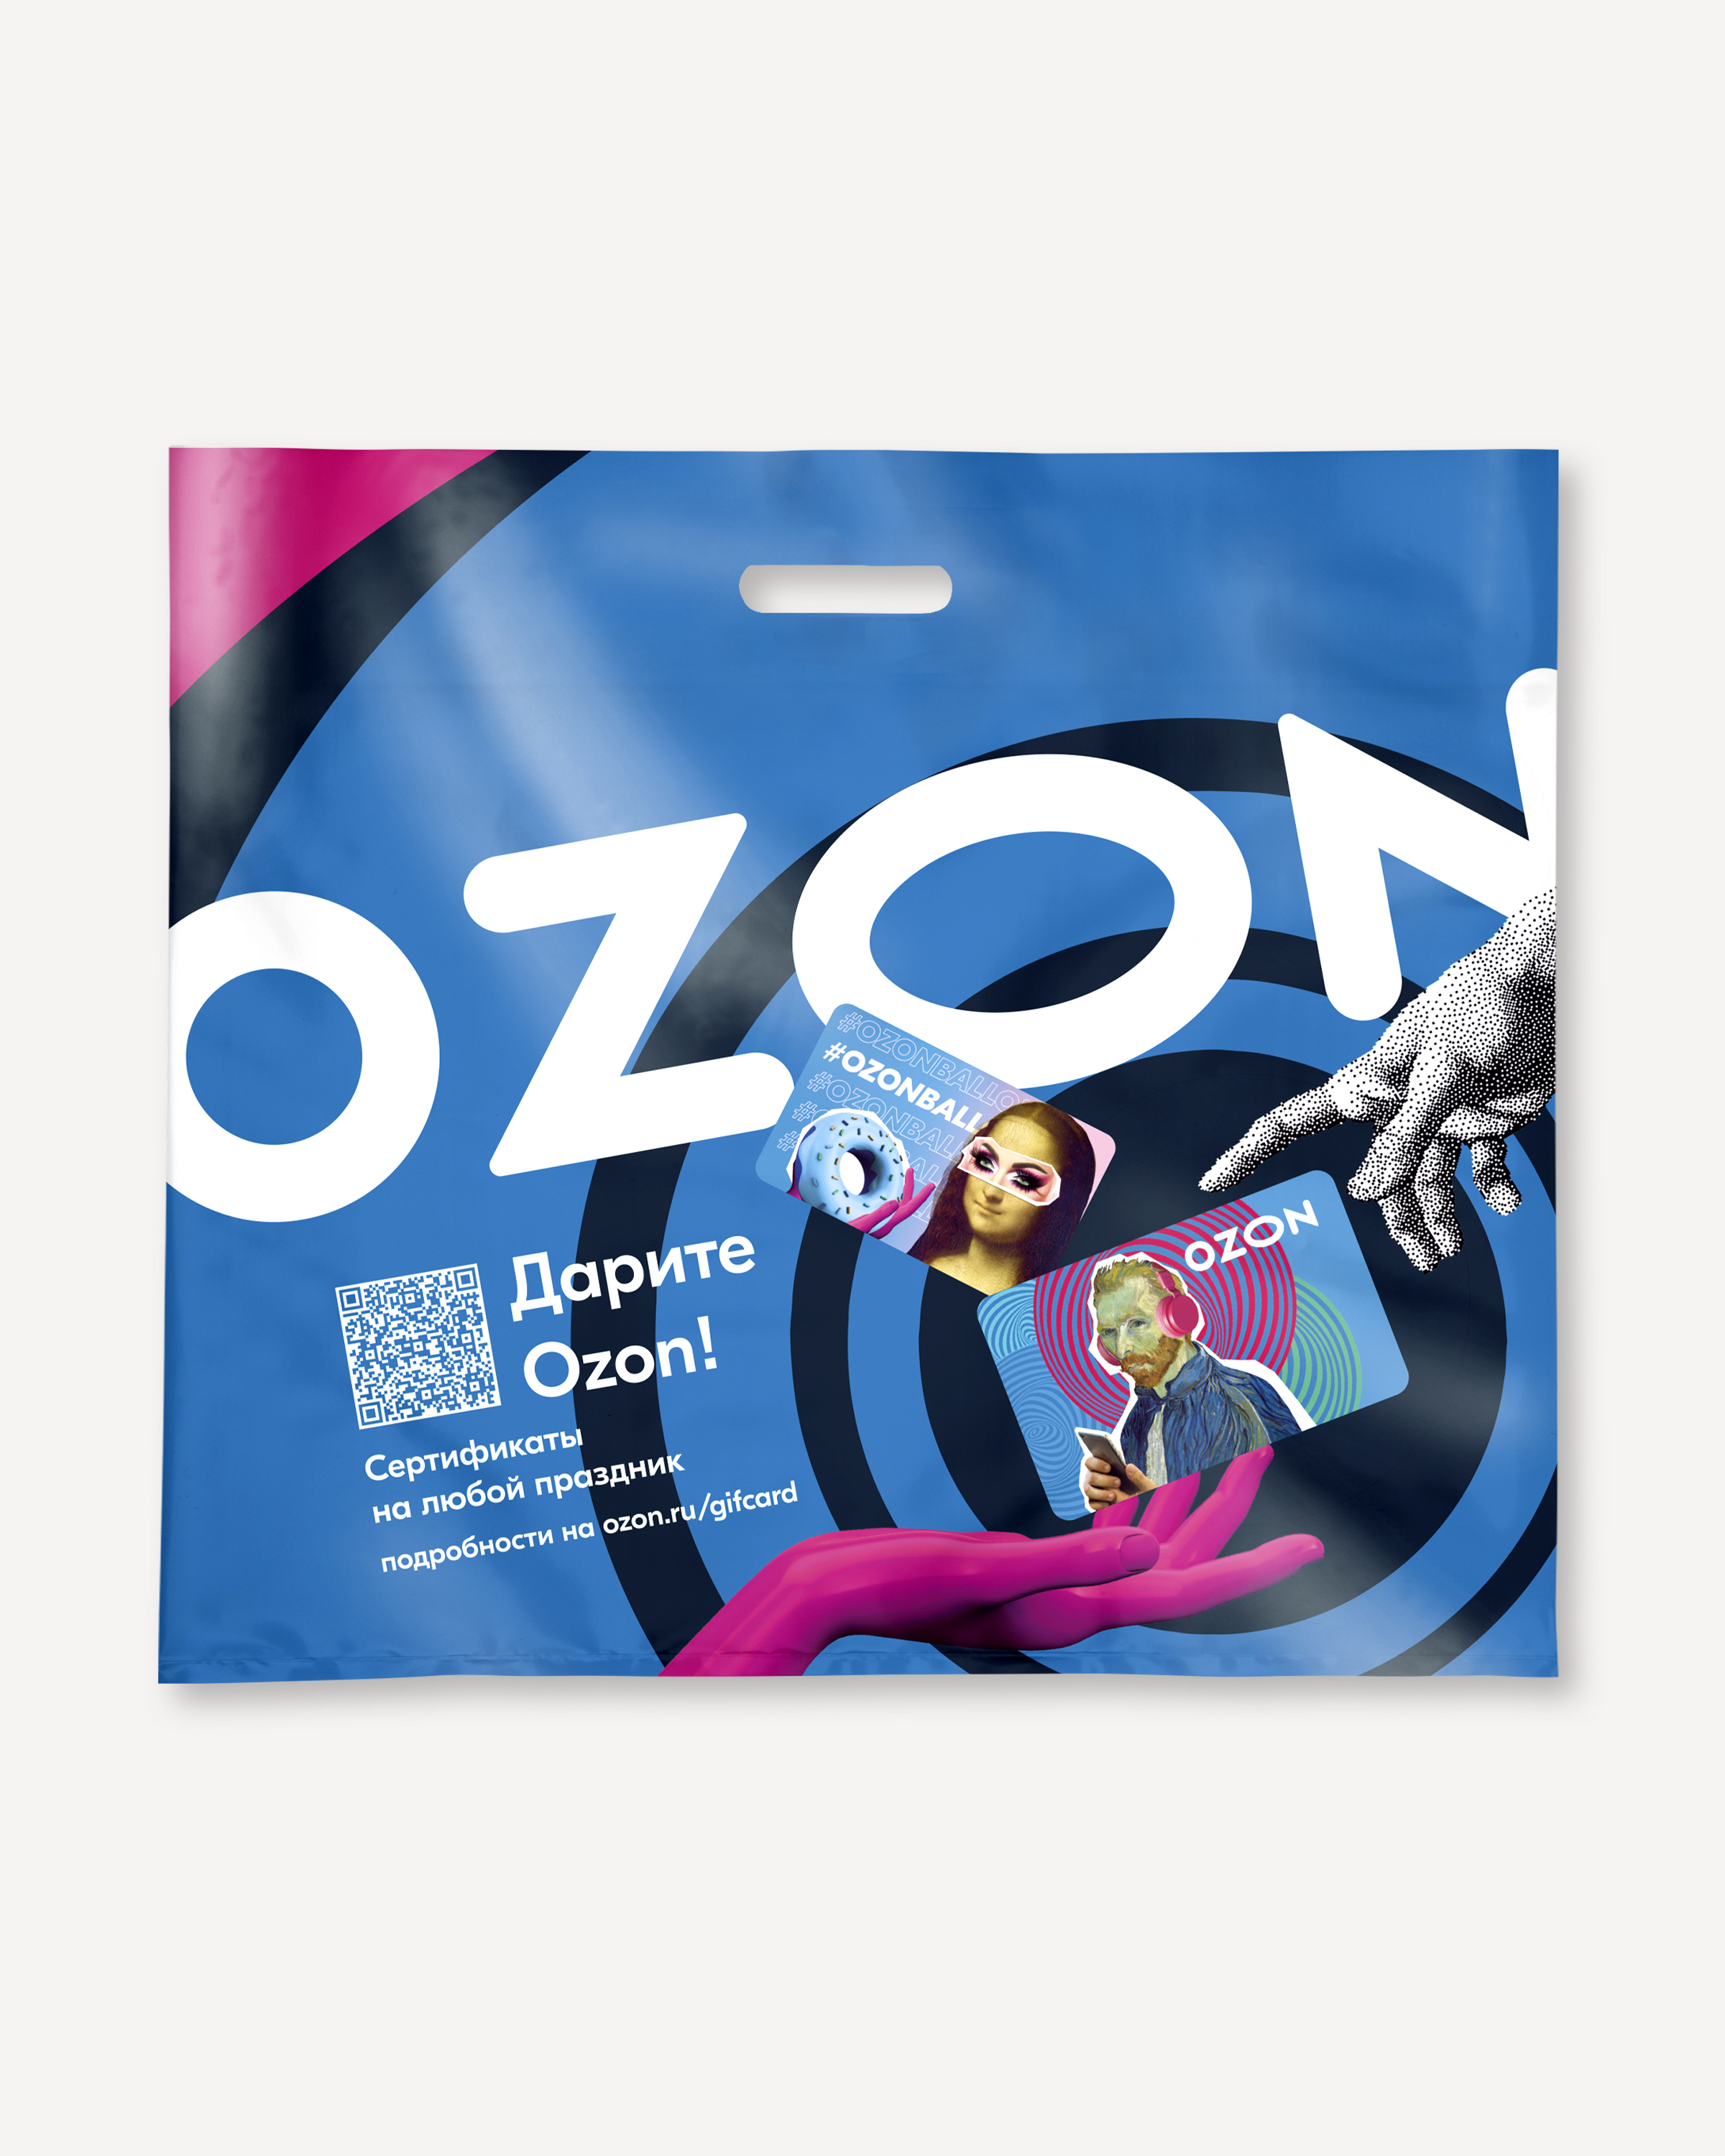 Пакет озон пвз. Пакет Озон. Большие пакеты Озон. Пакет Озон фирменный. Пакеты для упаковки Озон.